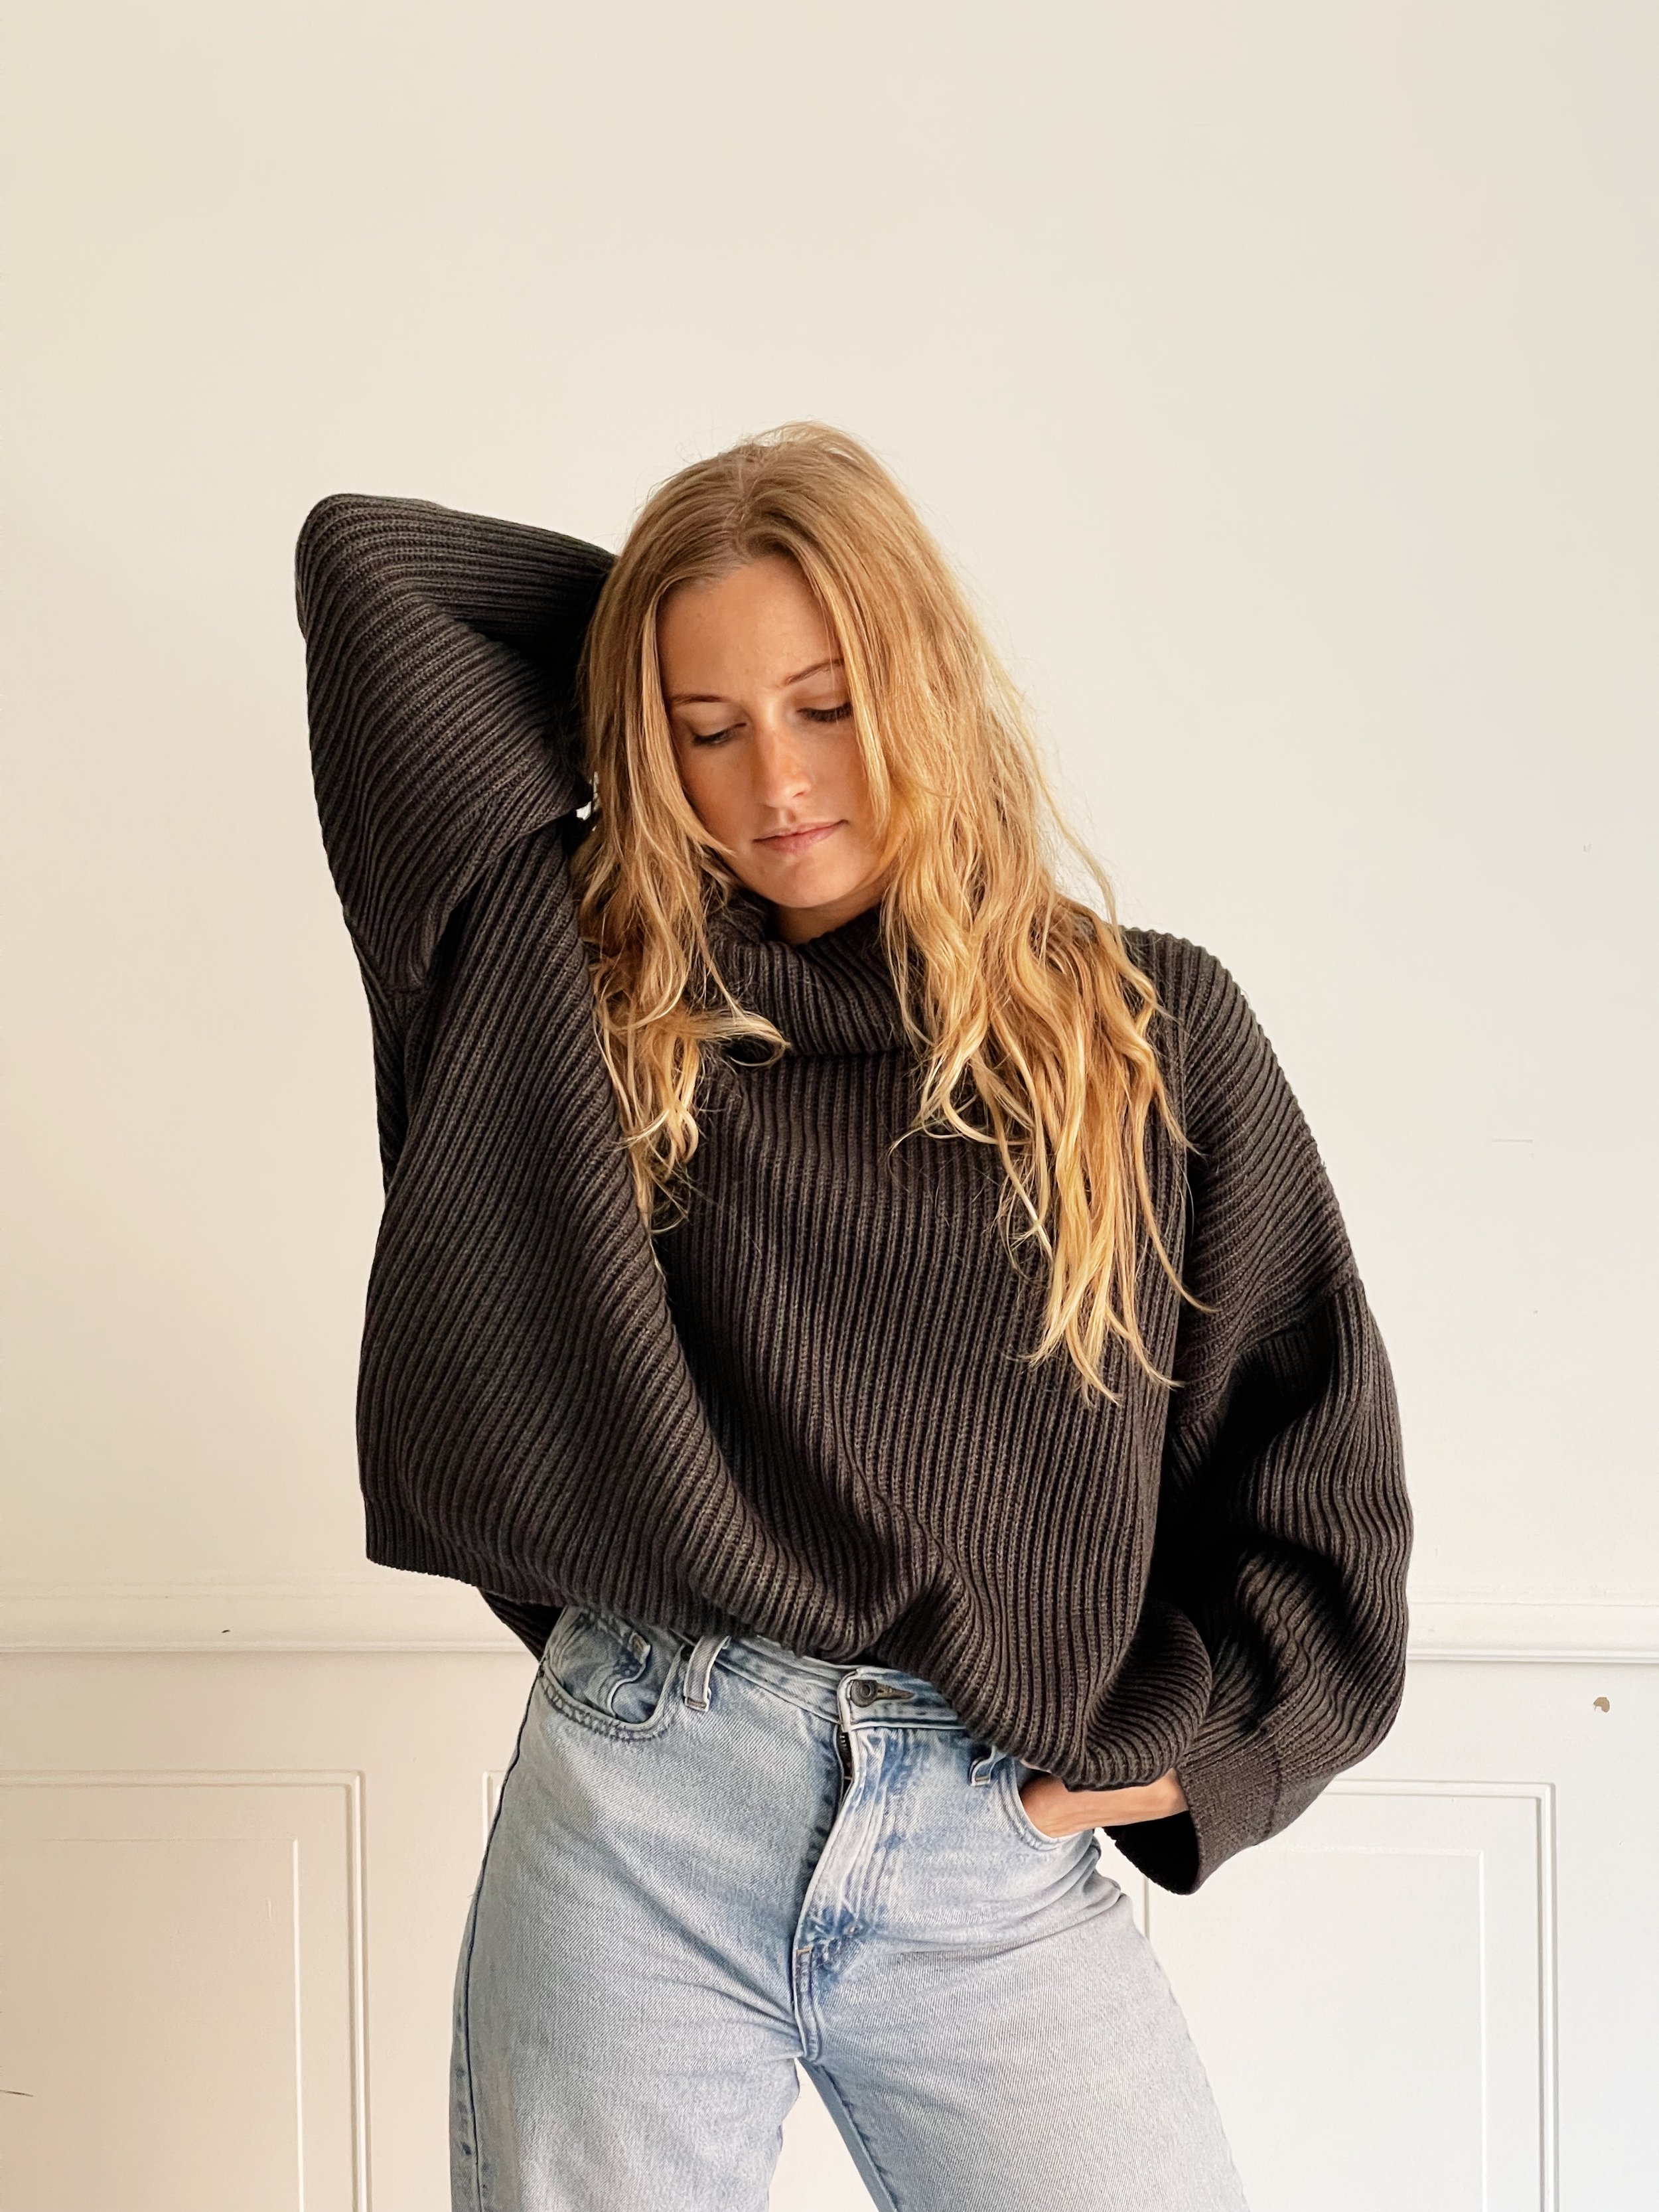 Laura Sweater - $165.00